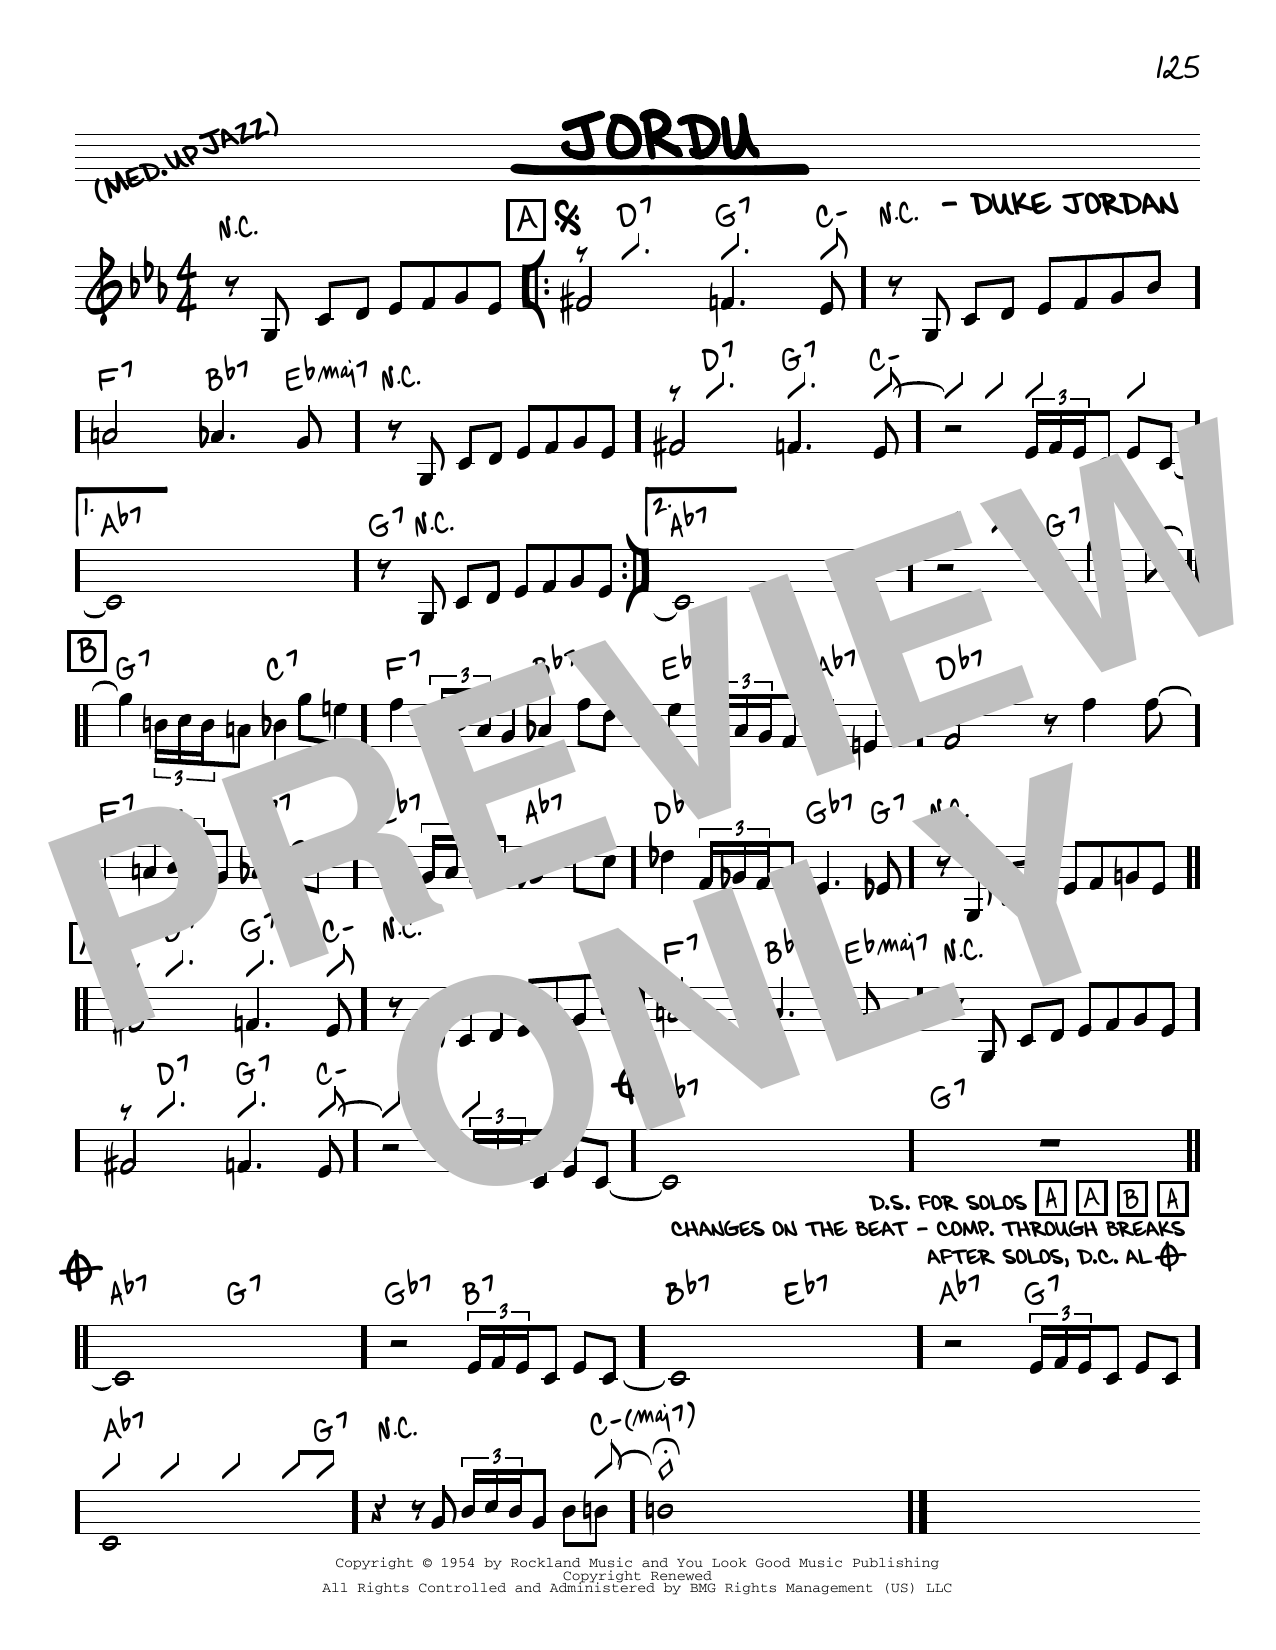 Duke Jordan Jordu Sheet Music Notes & Chords for Real Book - Melody & Chords - Eb Instruments - Download or Print PDF